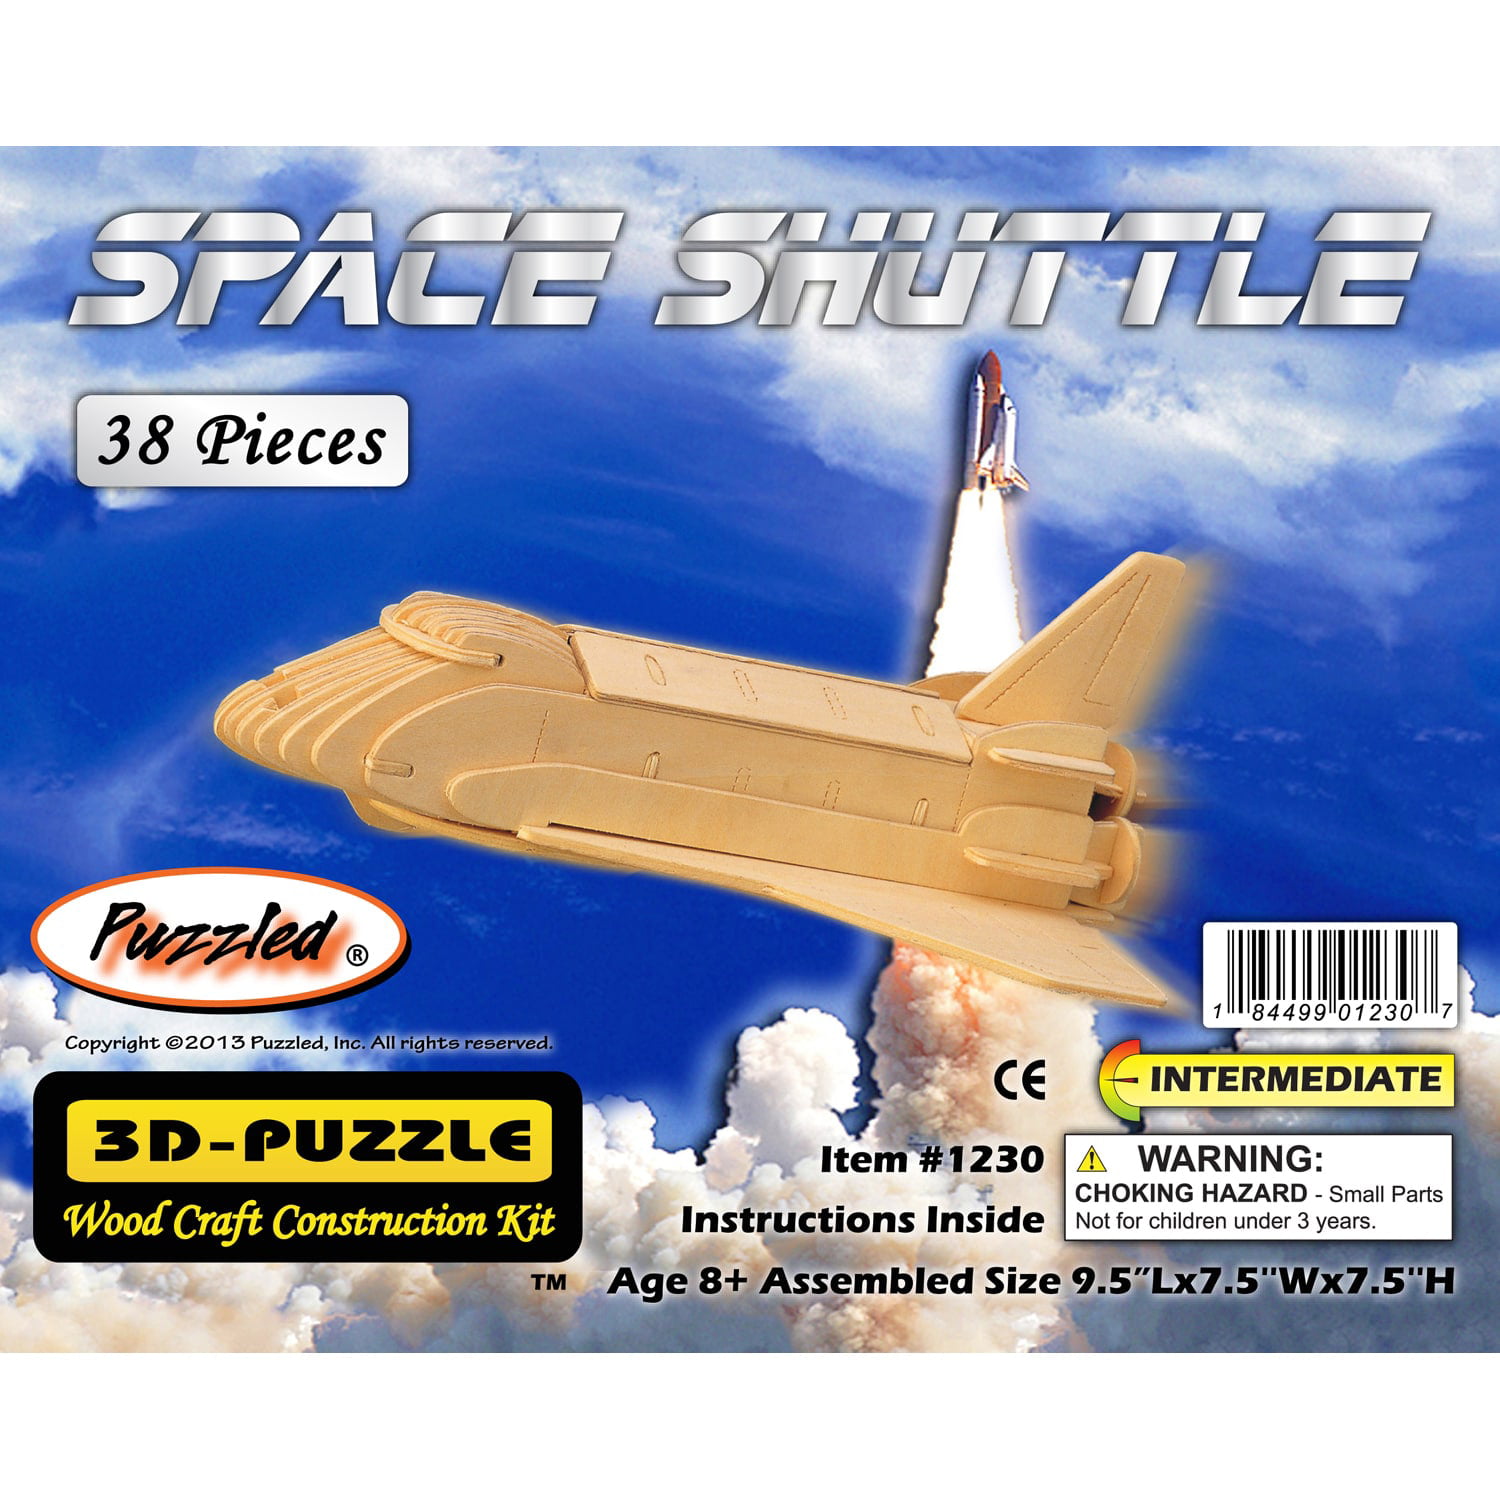 Puzzled Space Shuttle Wooden 3d Puzzle Construction Kit 184499012307 for sale online 